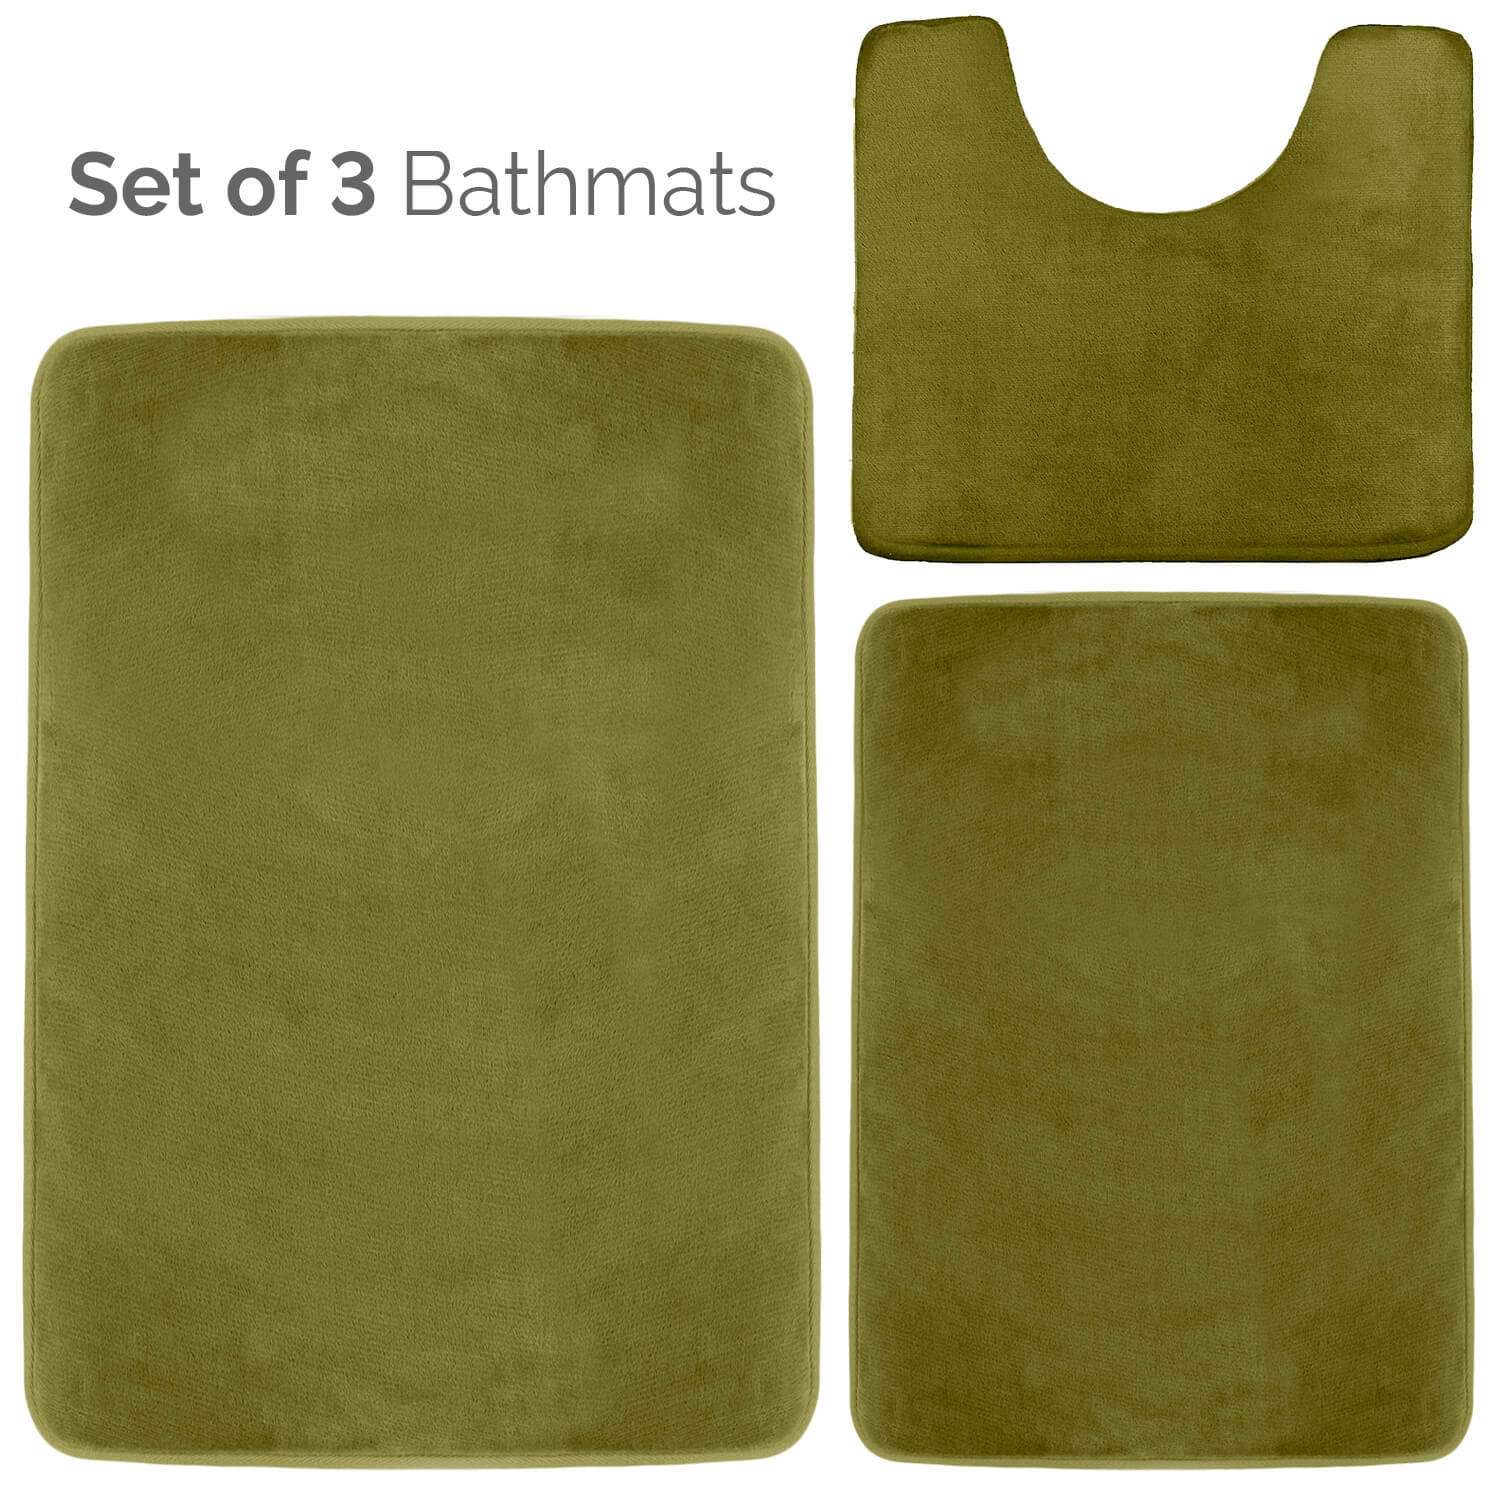 L and U-Shaped Size for Bathroom XL Details about   Yimobra 3 Pieces Memory Foam Bath Mat Set 